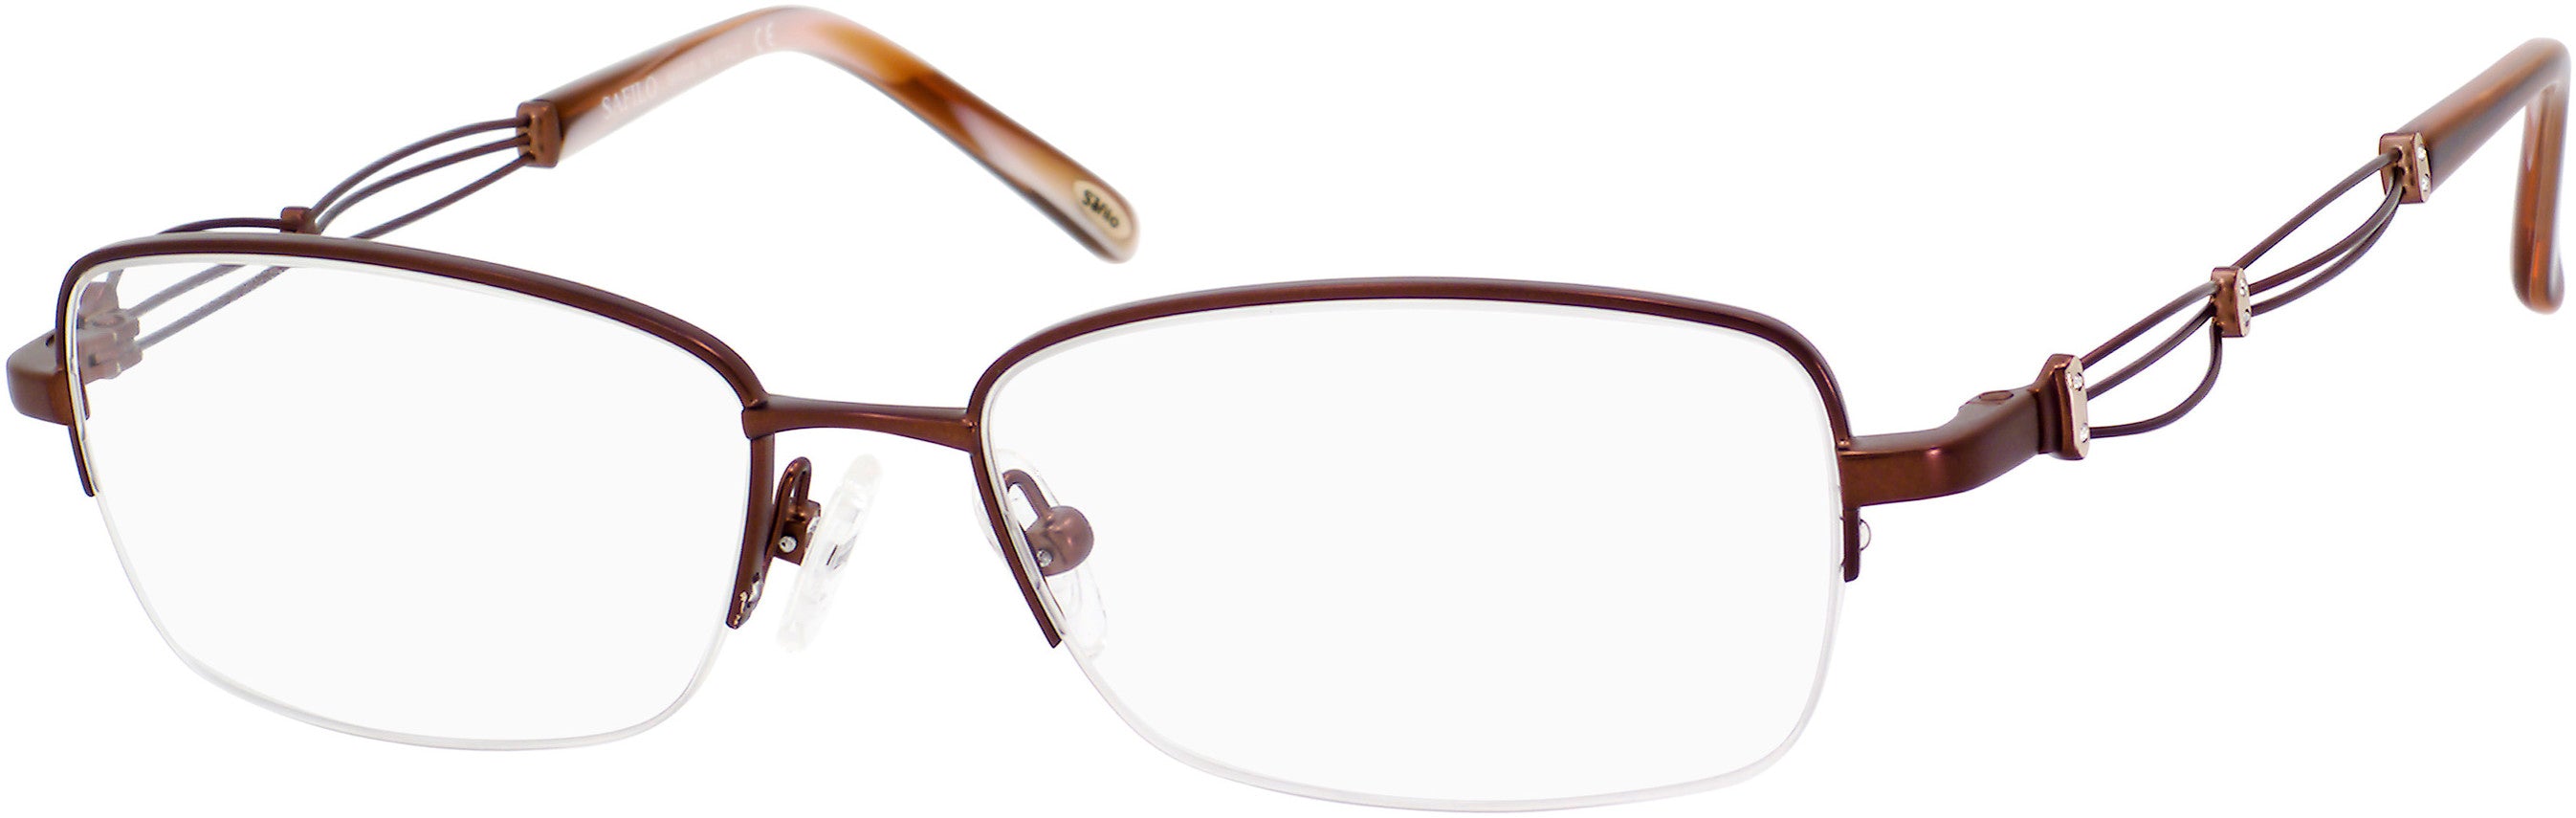  Emozioni 4351 Rectangular Eyeglasses 0FH5-0FH5  Chocolate (00 Demo Lens)